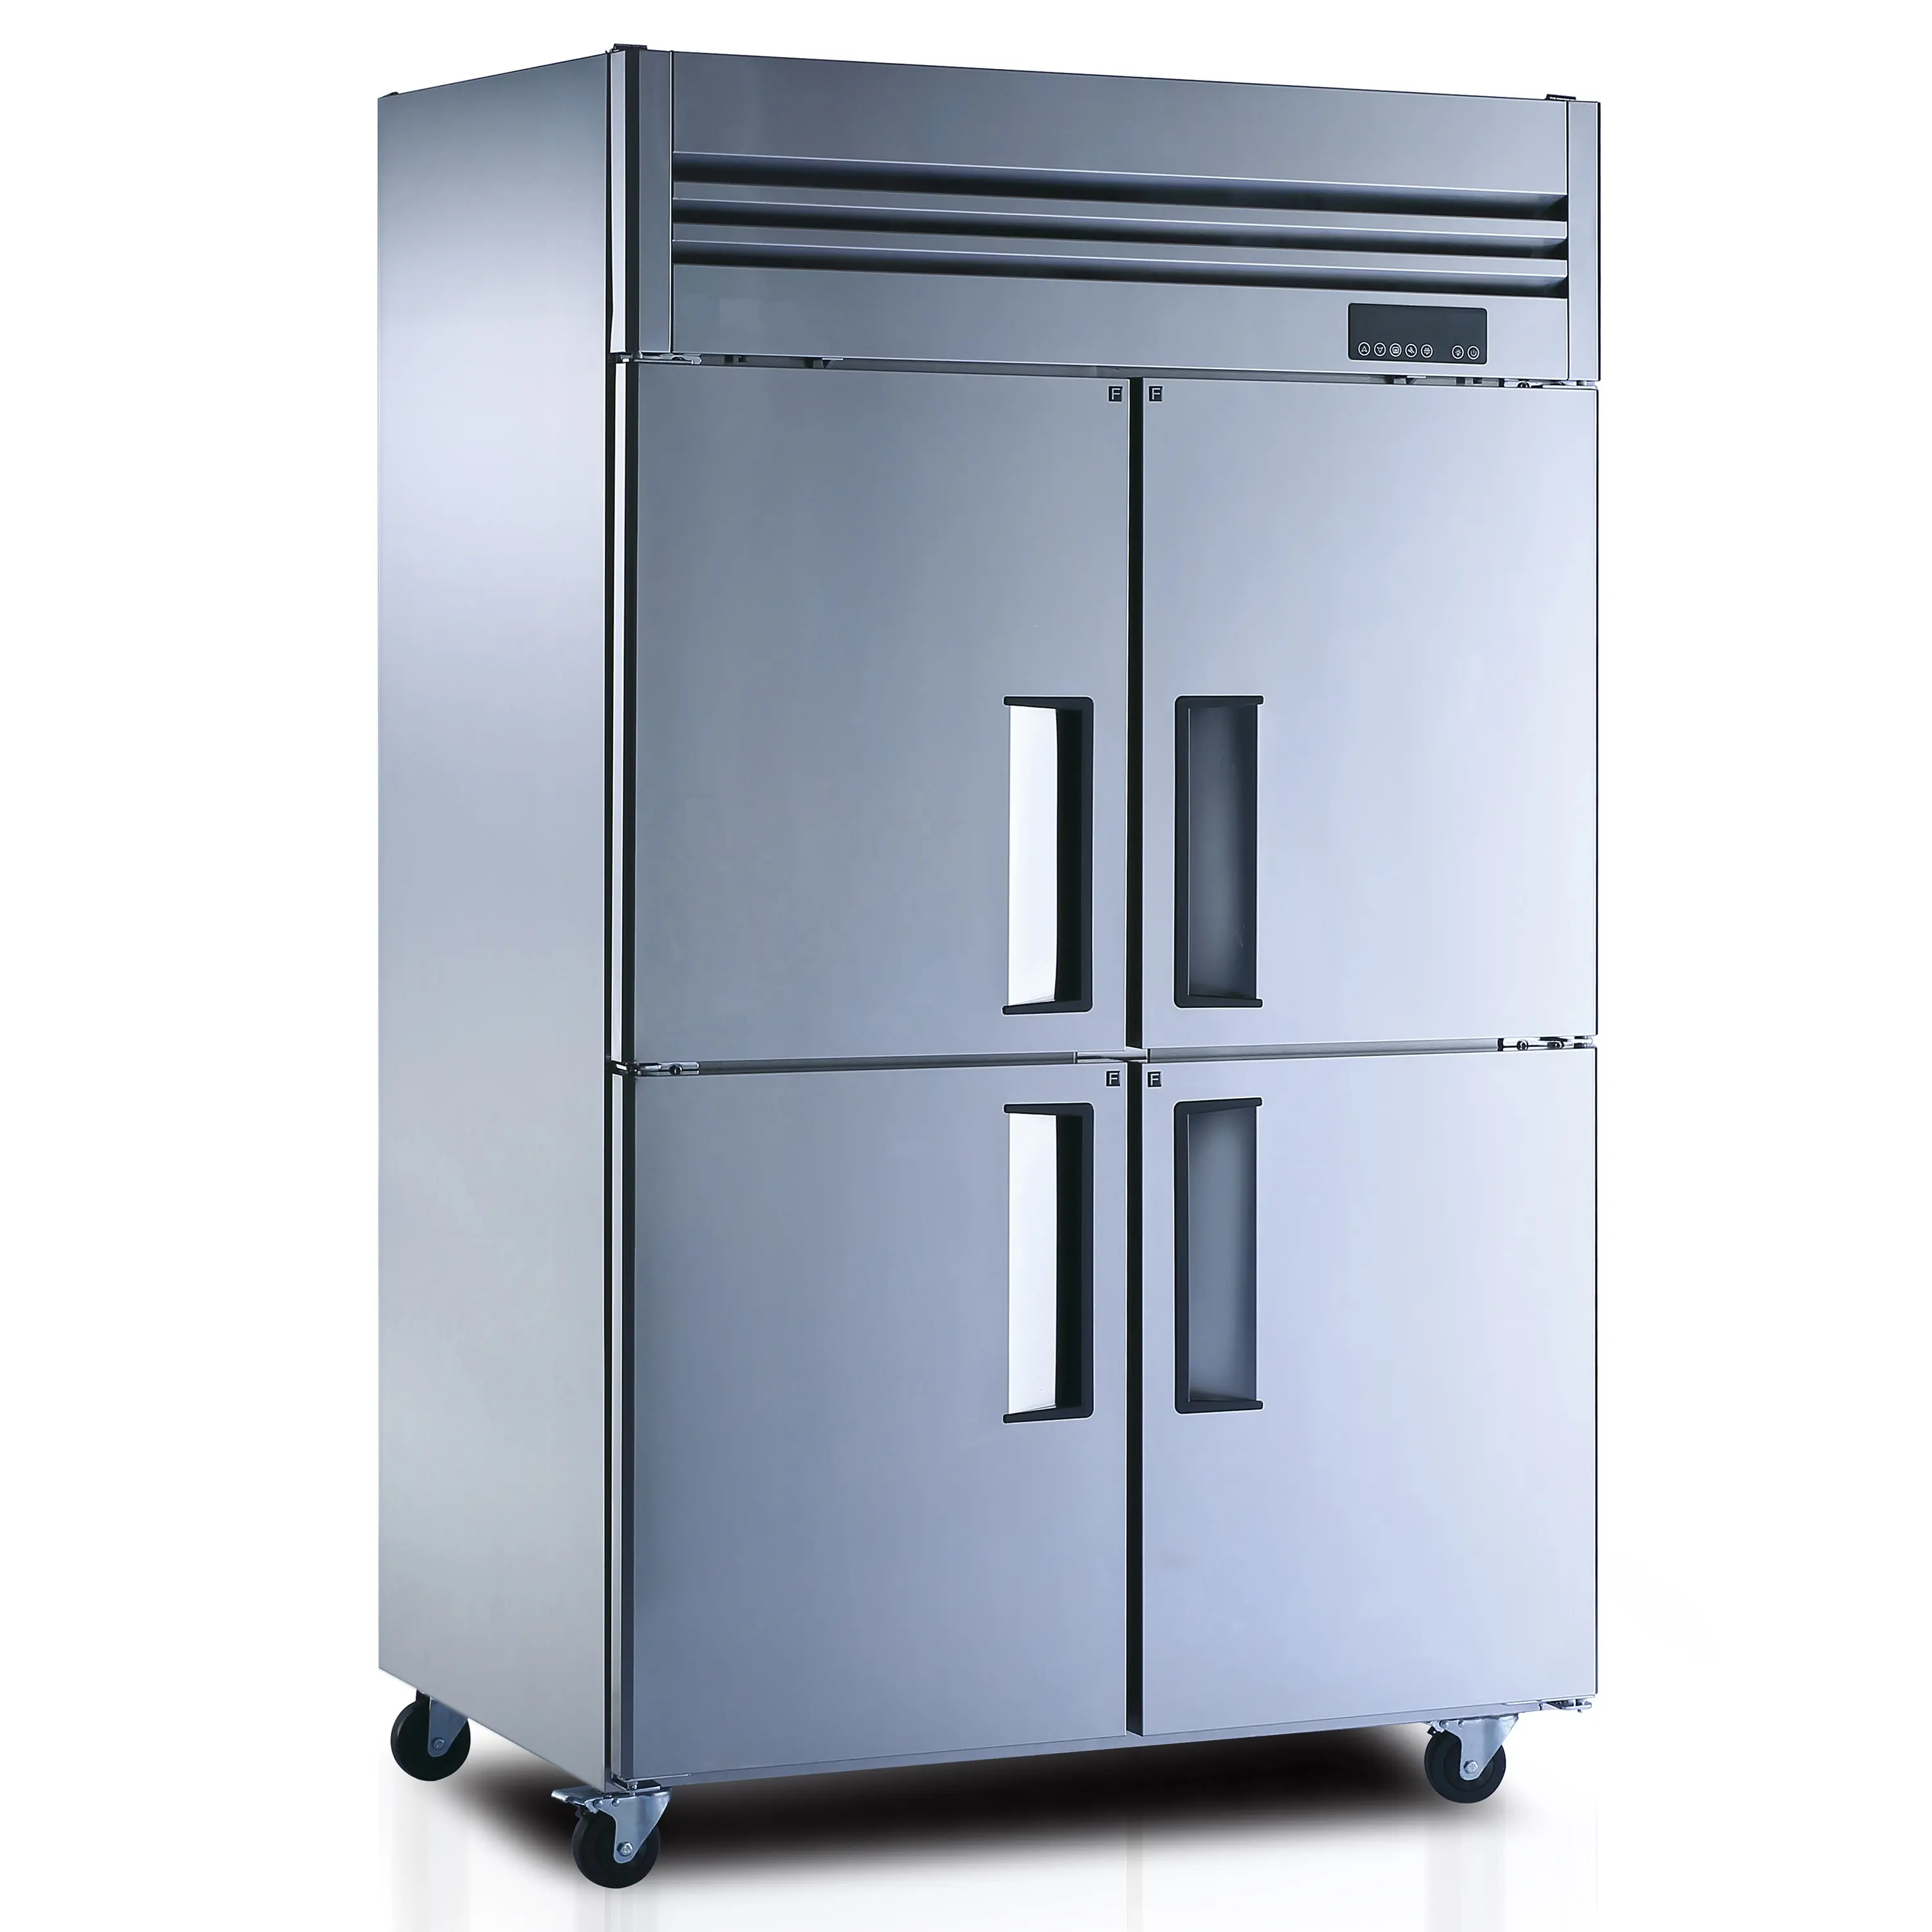 Arriart kulkas vertikal Stainless Steel, peralatan dapur memanggang komersial empat pintu, kulkas Stainless Steel